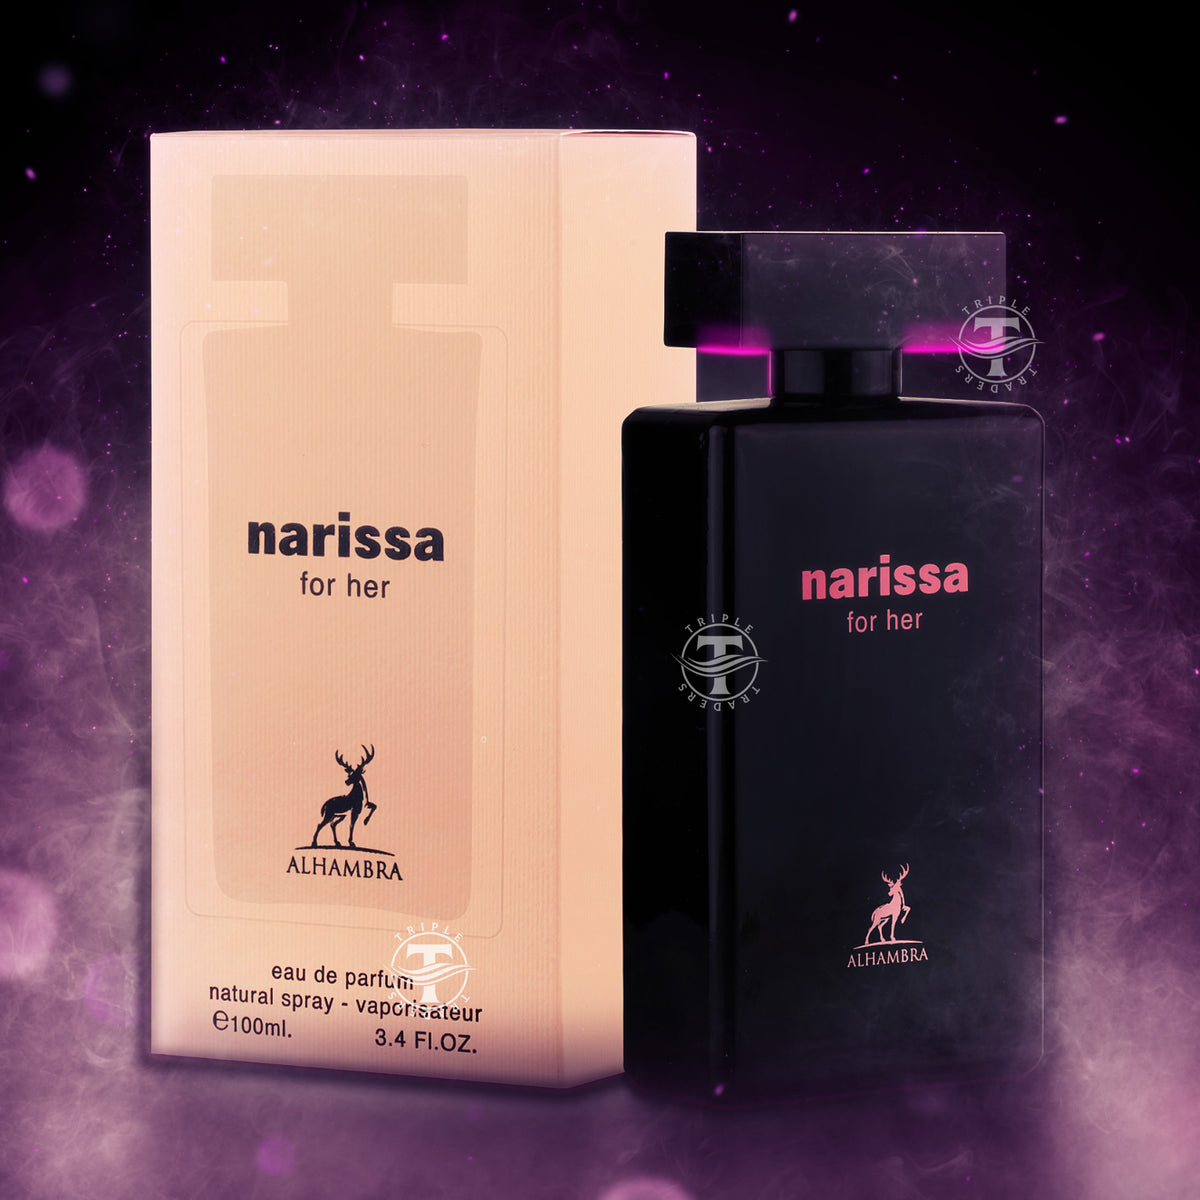 For Her Eau de Parfum, 50 ml – Narciso Rodriguez : Fragrance for women